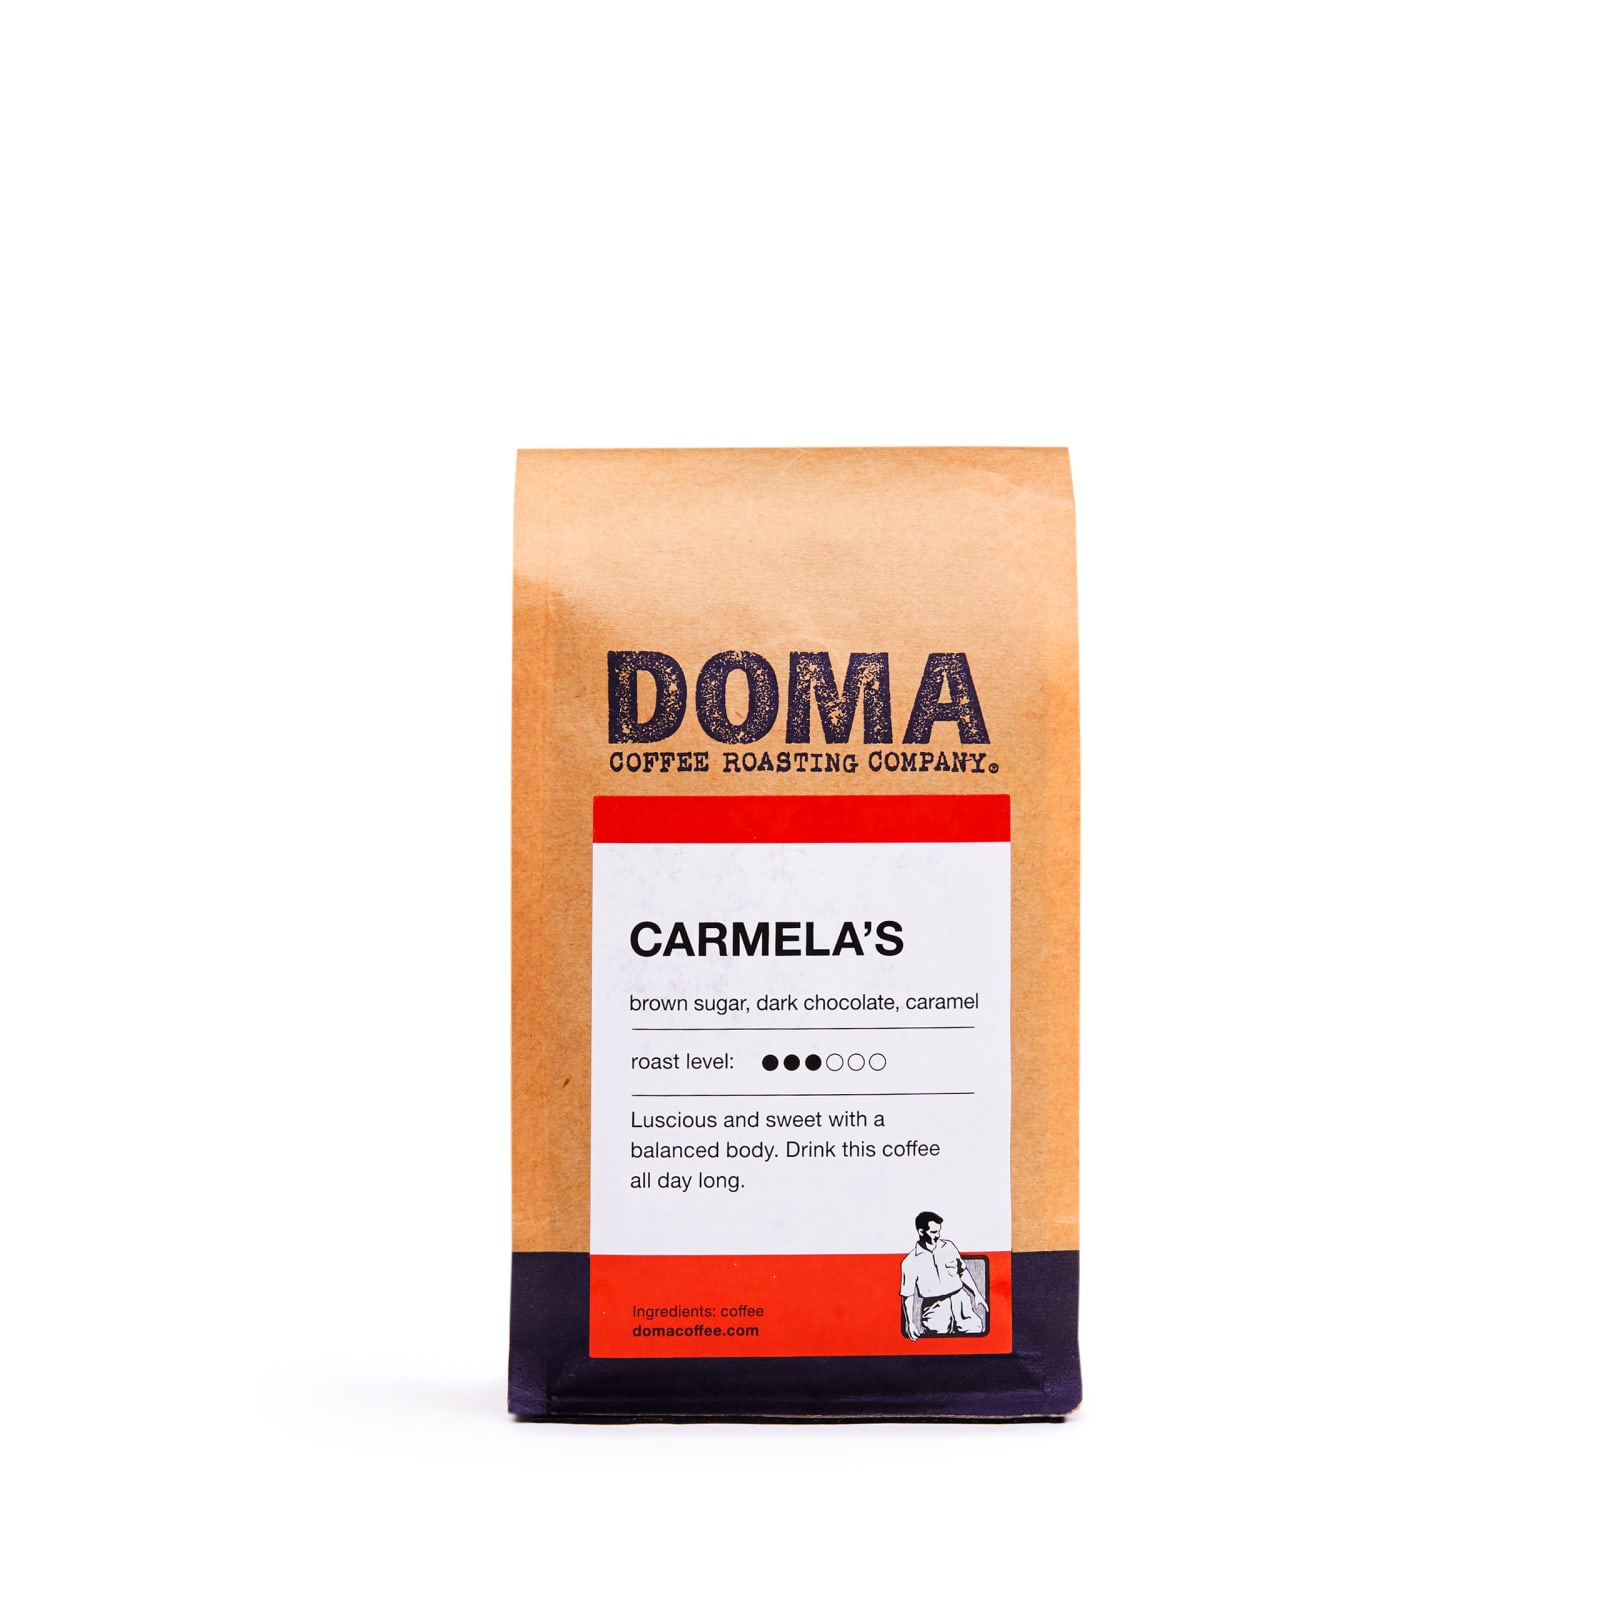 Doma Carmela's coffee bag